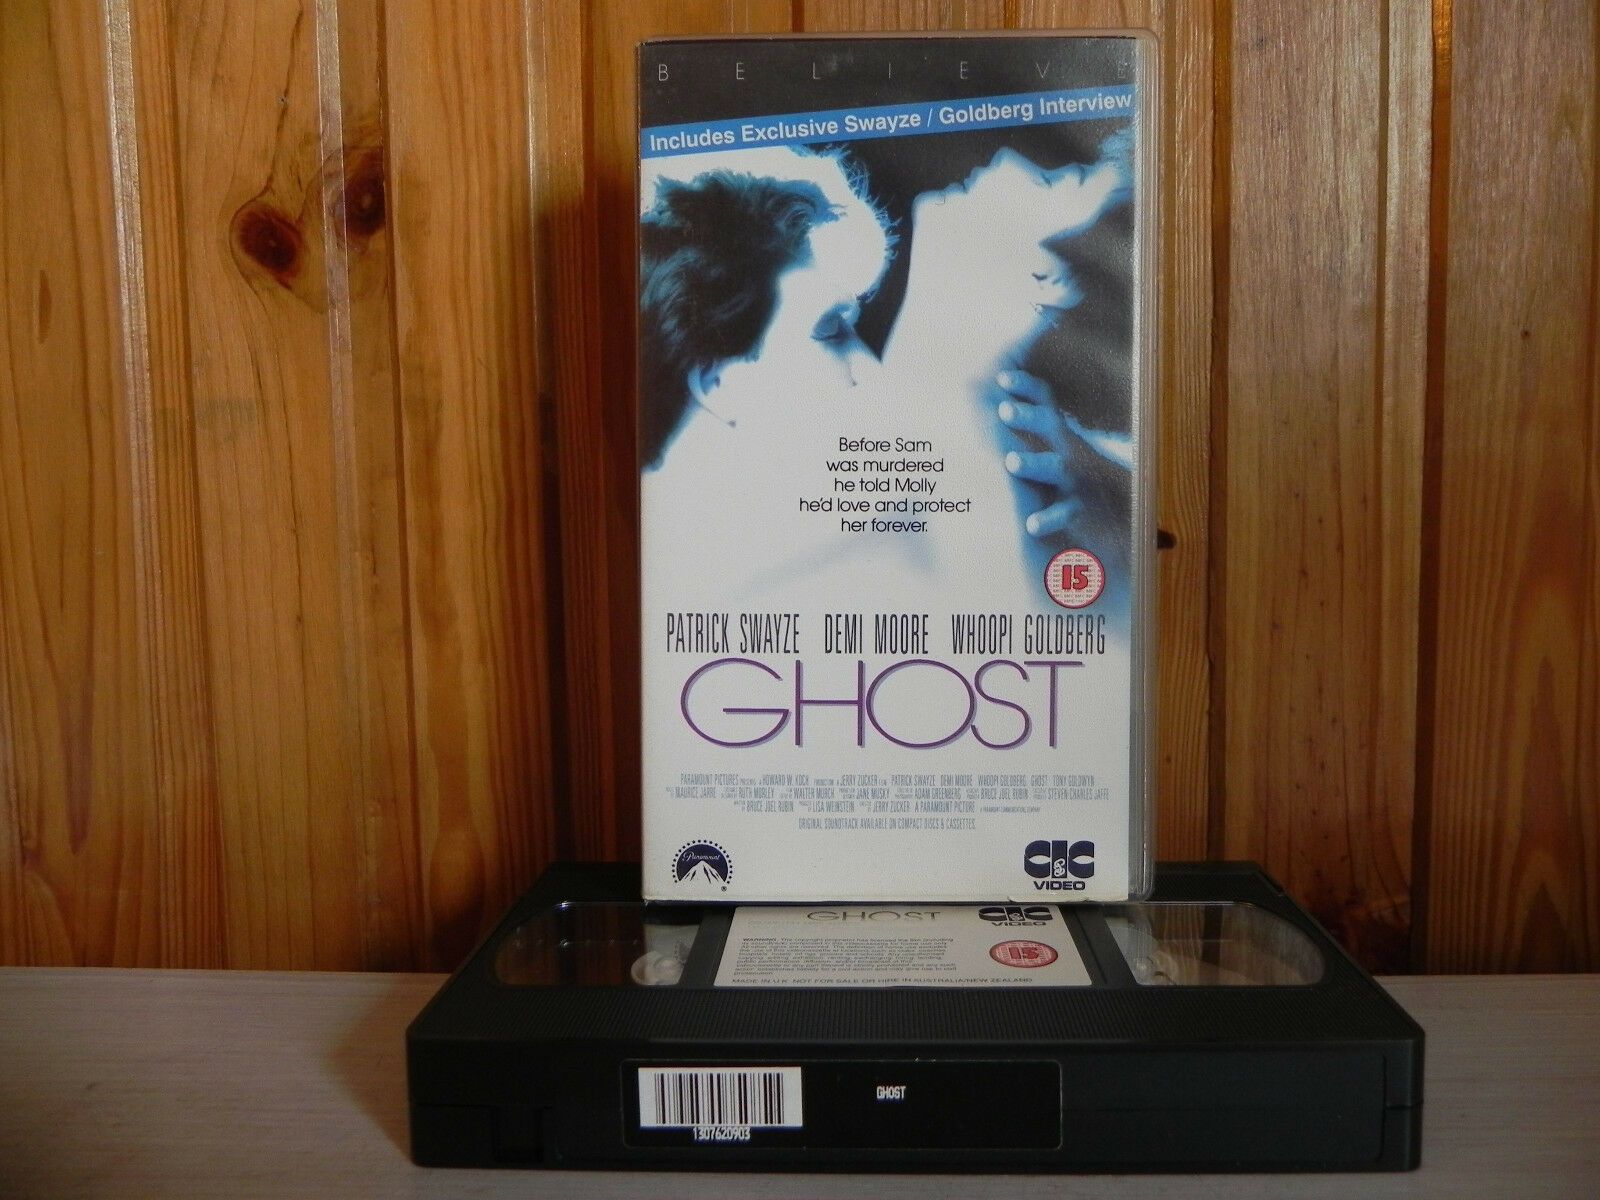 Ghost - CIC Video - Drama - Patrick Swayze - Demi Moore - Whoopi Goldberg - VHS-